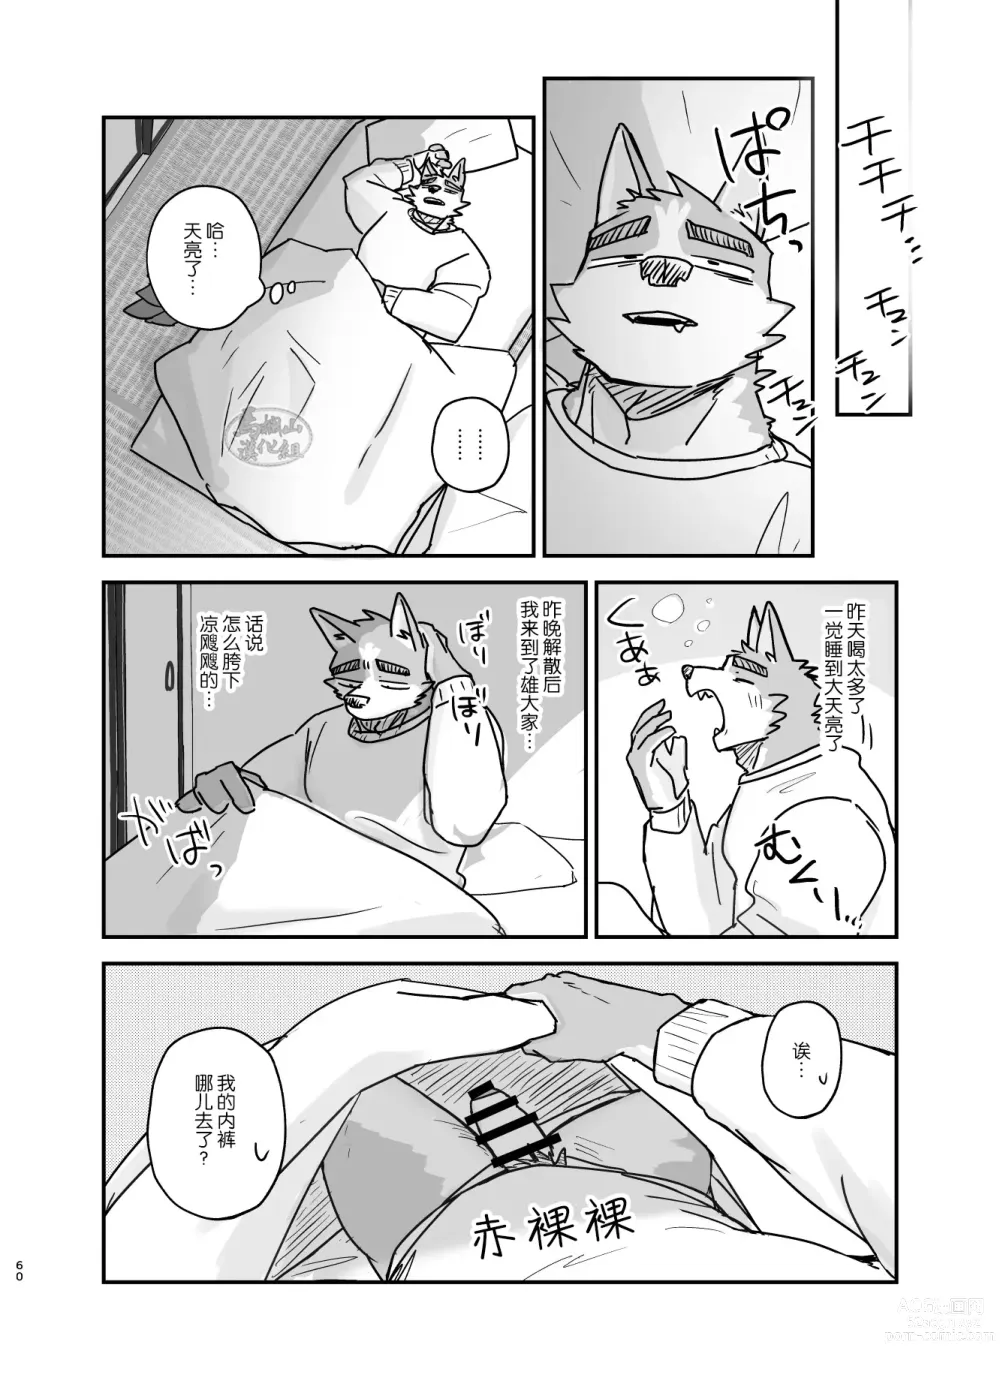 Page 59 of doujinshi 梦乡时分的情事